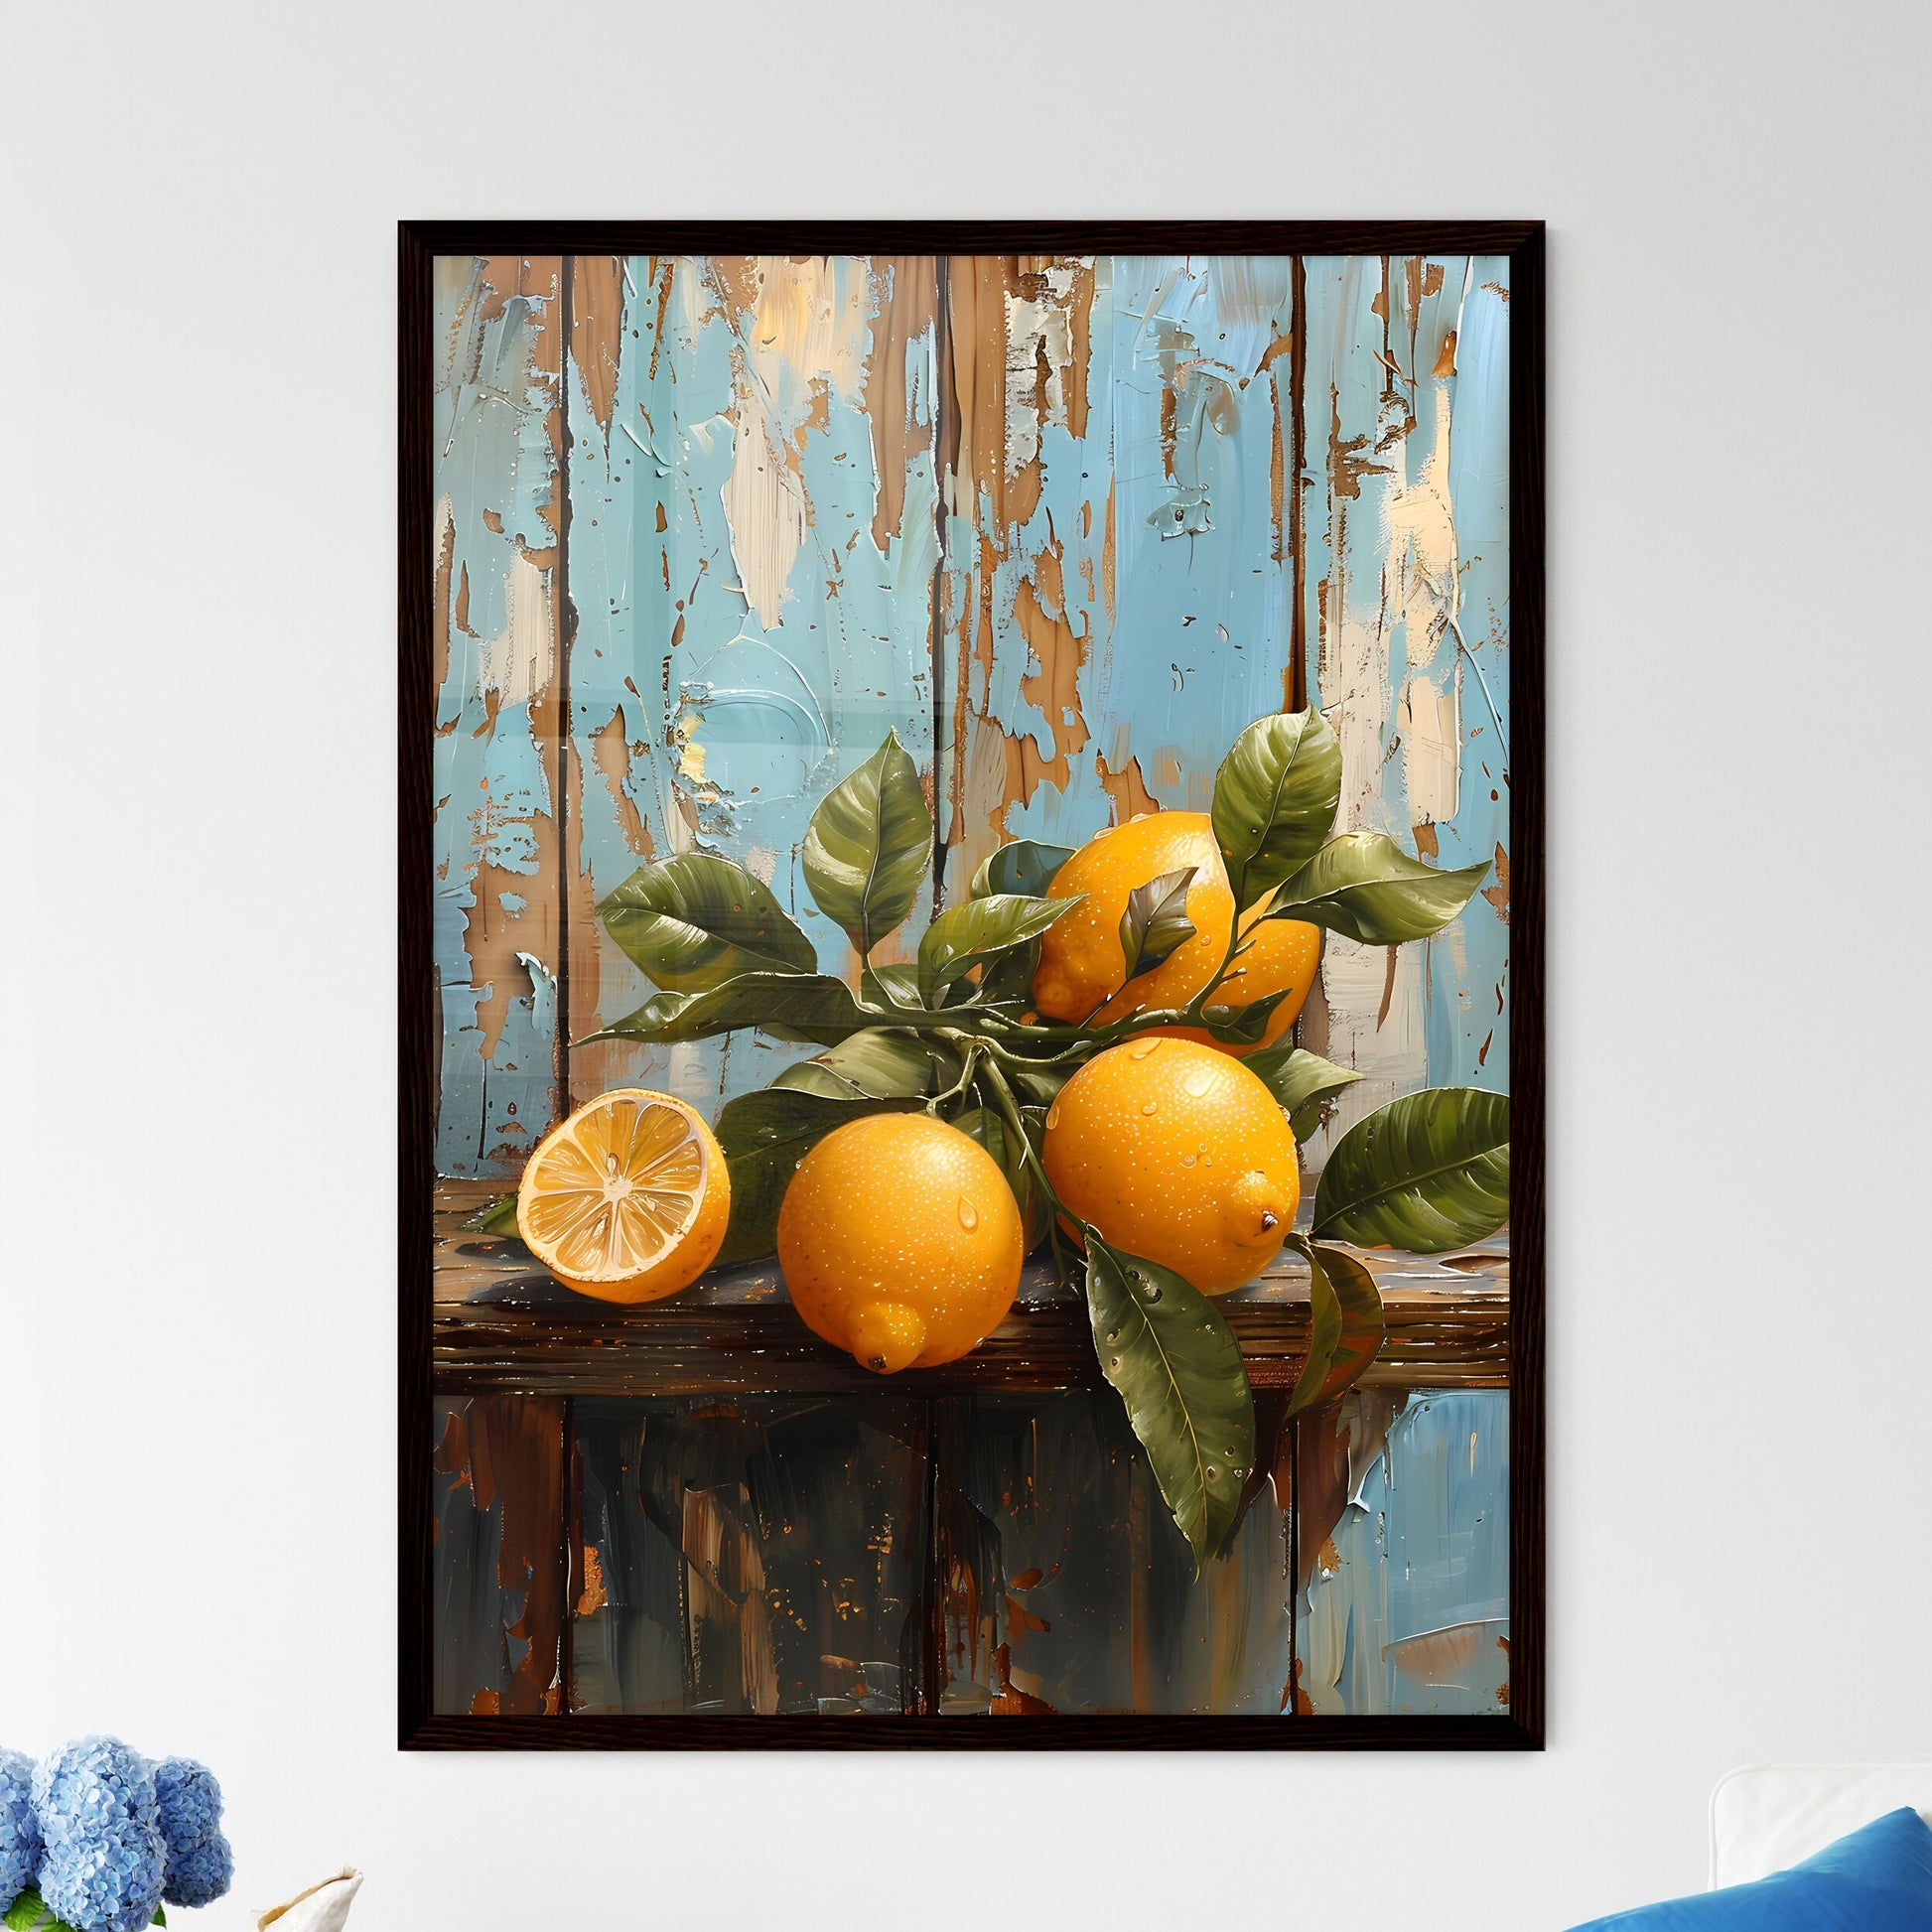 Vibrant Vintage Oil Painting of Lemons and Leaves on Oak Wood Table, Depicting Art Still Life Default Title